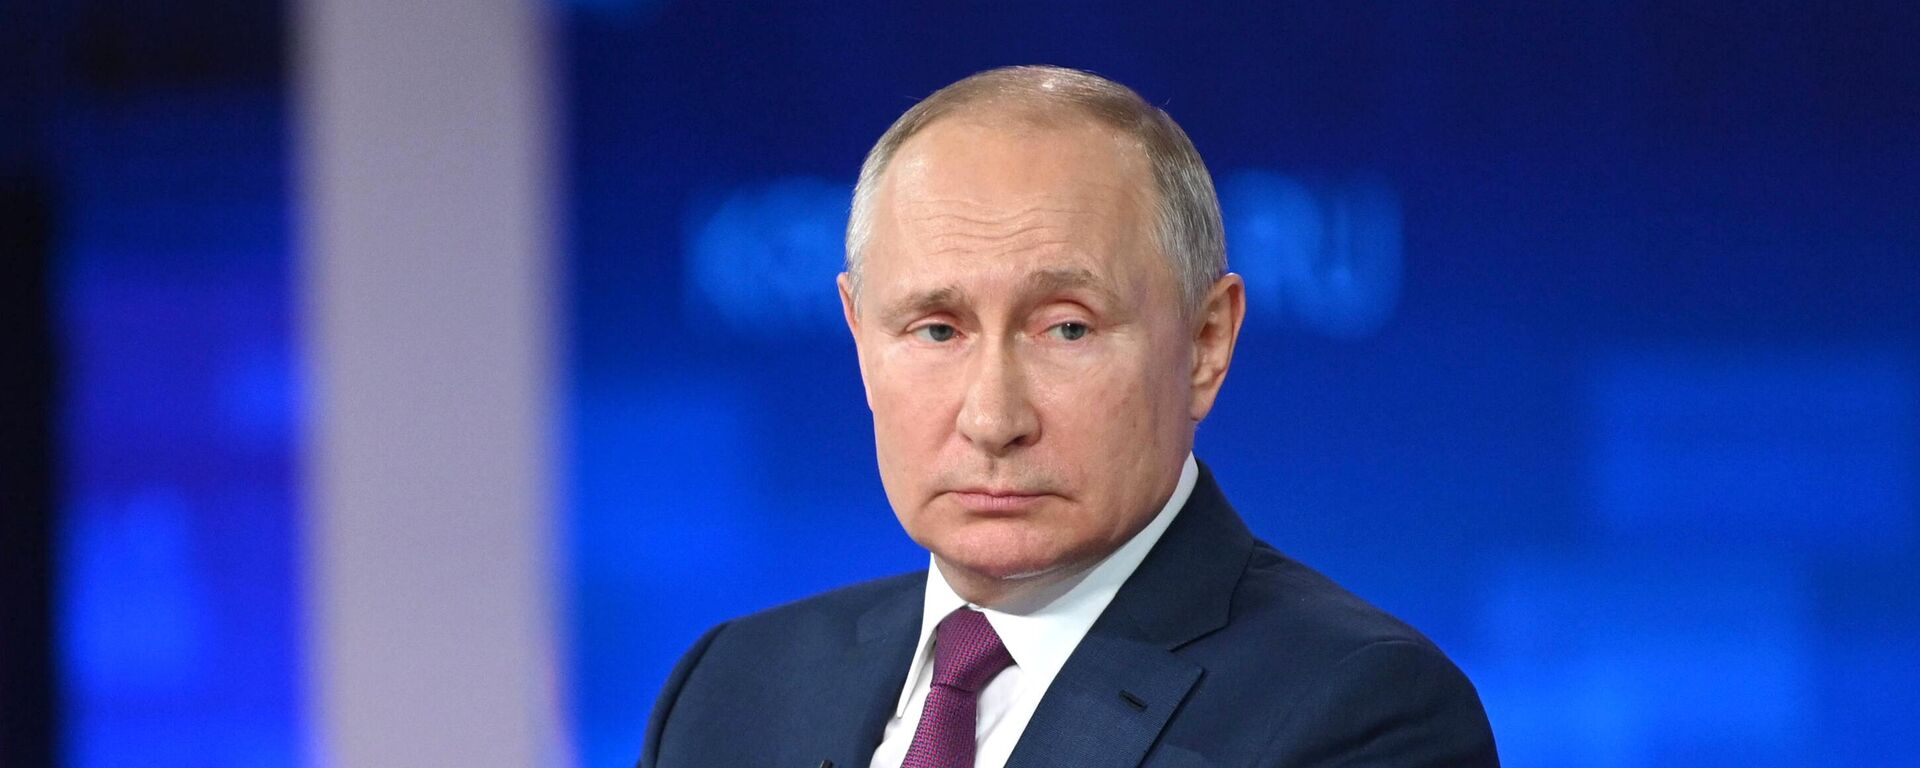 Rusijos prezidentas Vladimiras Putinas - Sputnik Lietuva, 1920, 01.07.2021